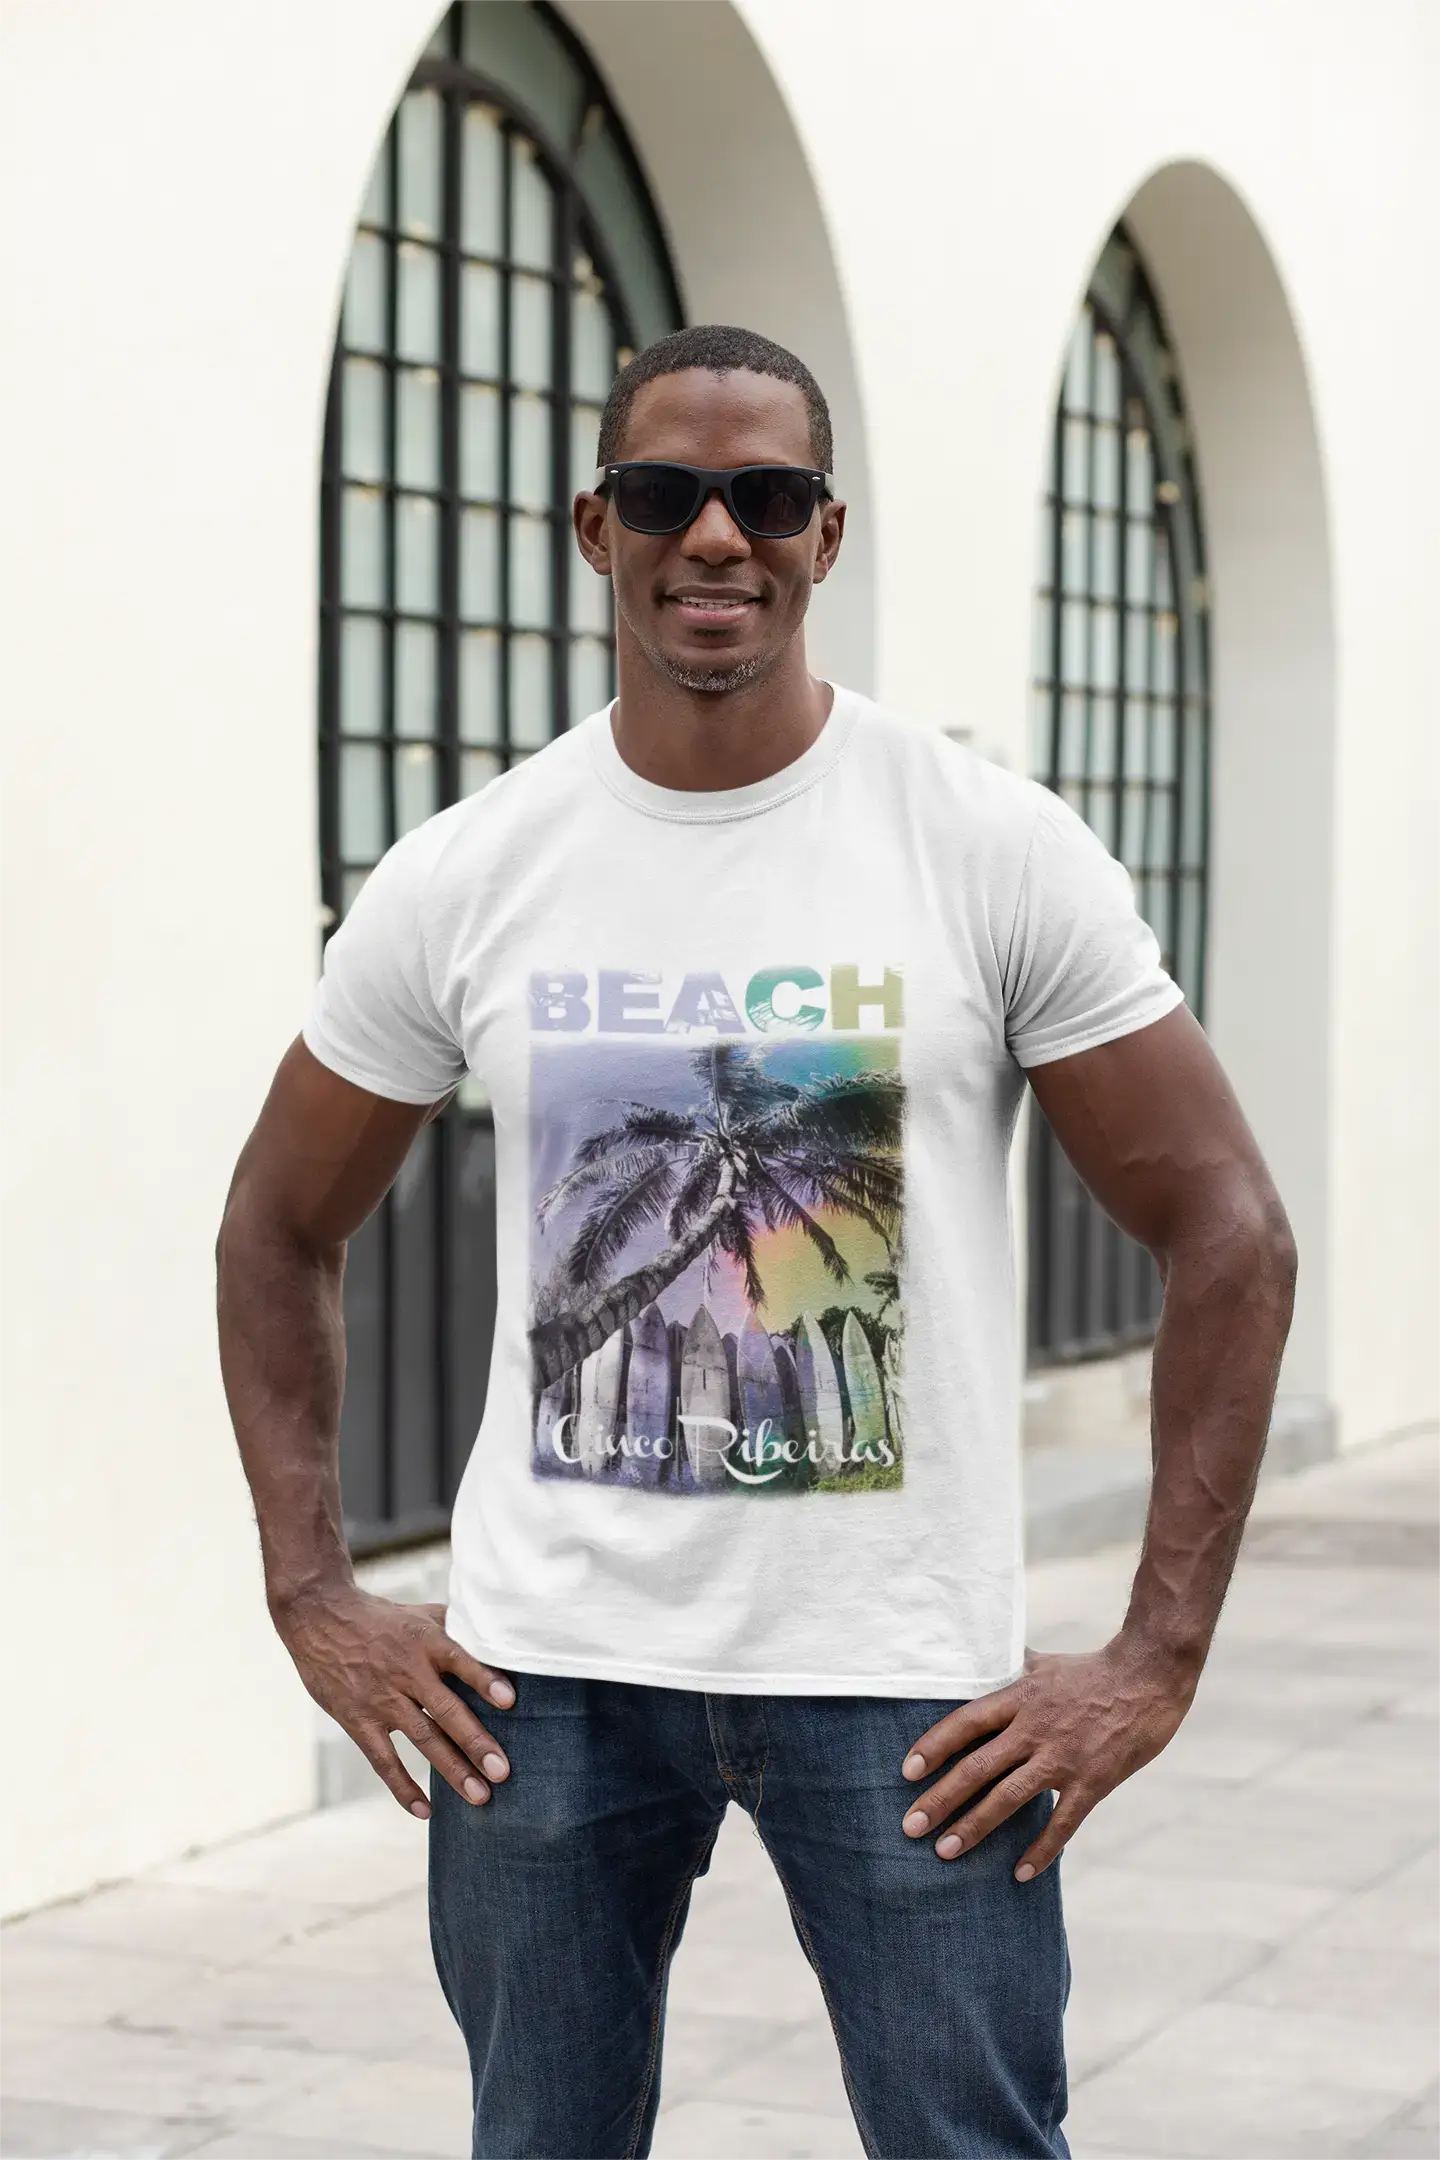 Cinco Ribeiras, Beach Palm, white, Men's Short Sleeve Round Neck T-shirt